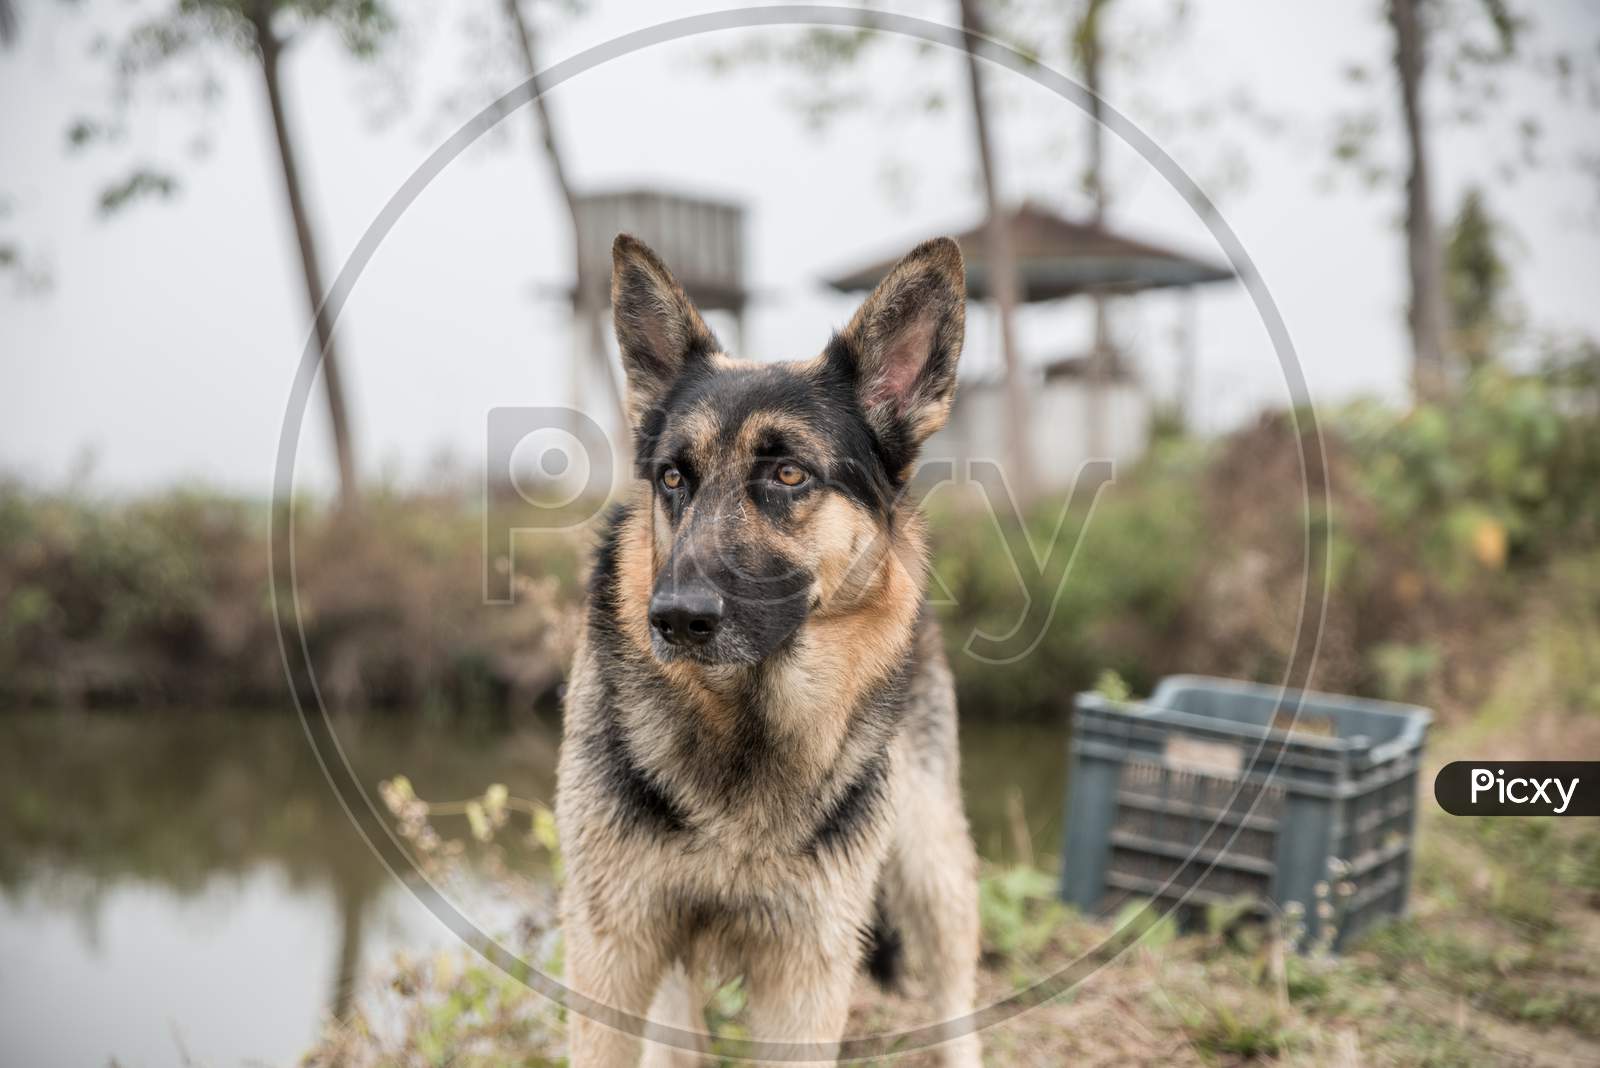 German Shepherd Dog, A friendly Pet